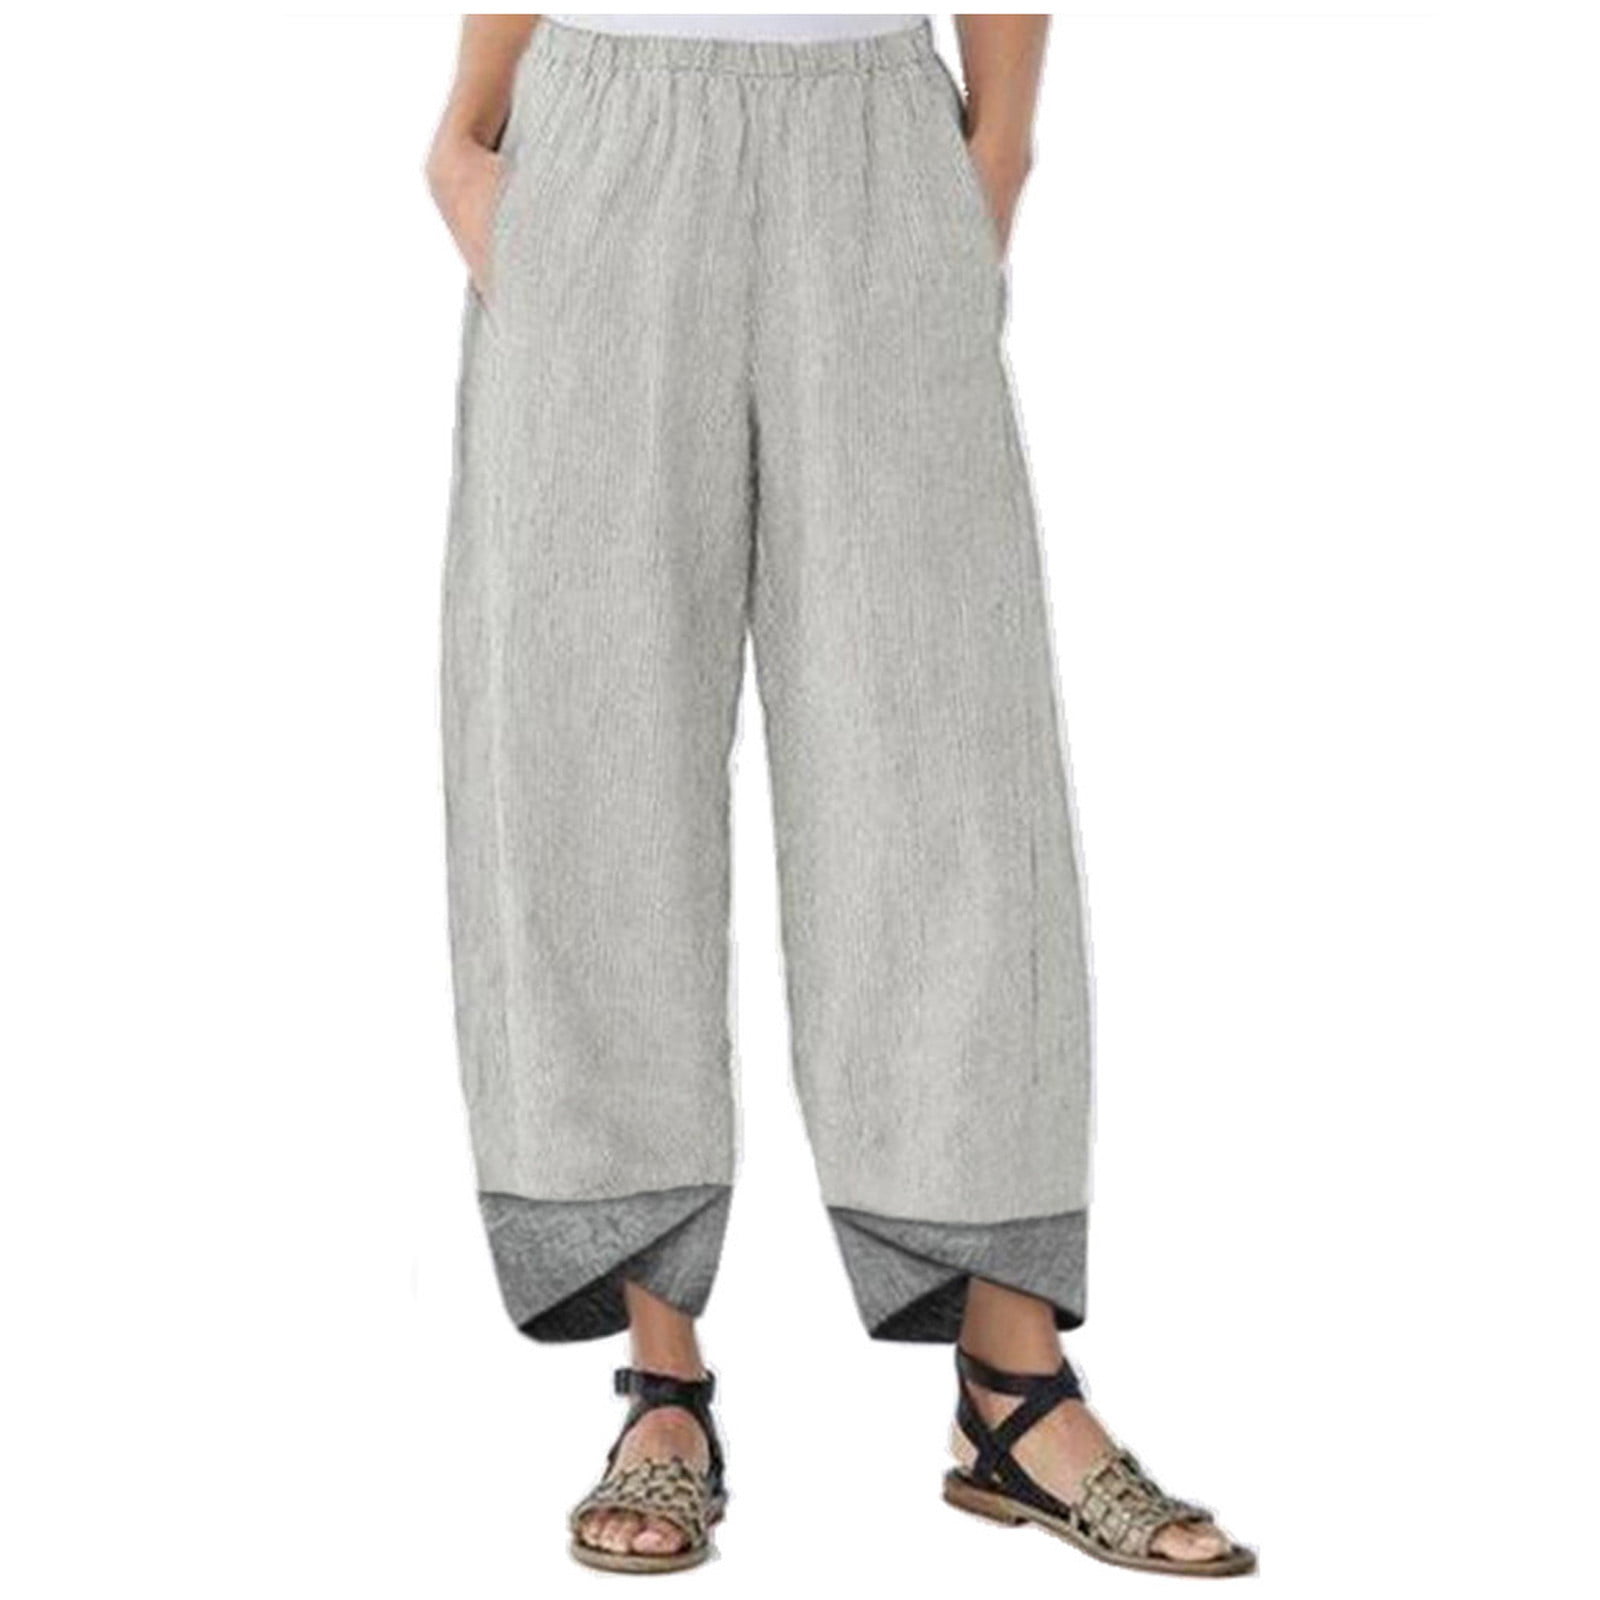 ZXHACSJ Women's Casual Cotton Linen Solid Patchwork Irregular Loose  Trousers Pants Beige S